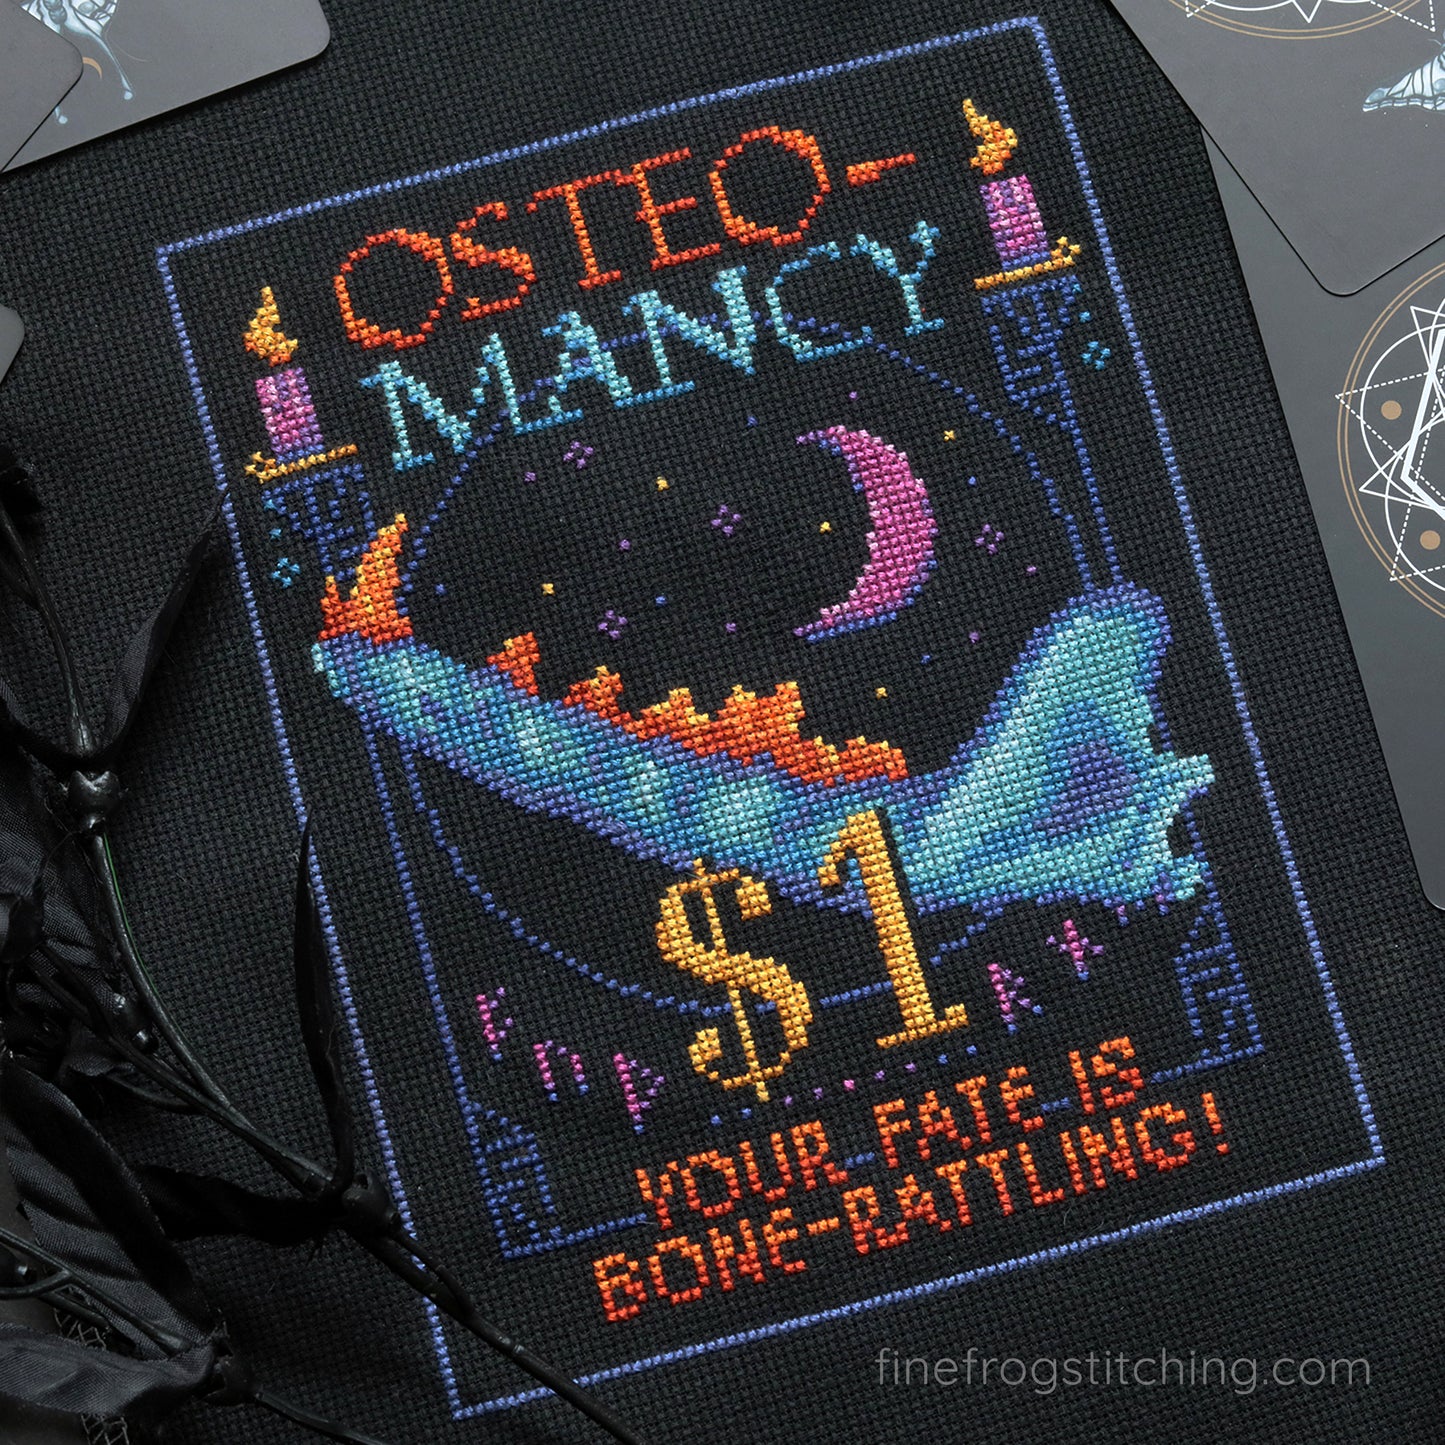 One-Dollar Osteomancy - PDF mystical bone fortune teller cross stitch pattern